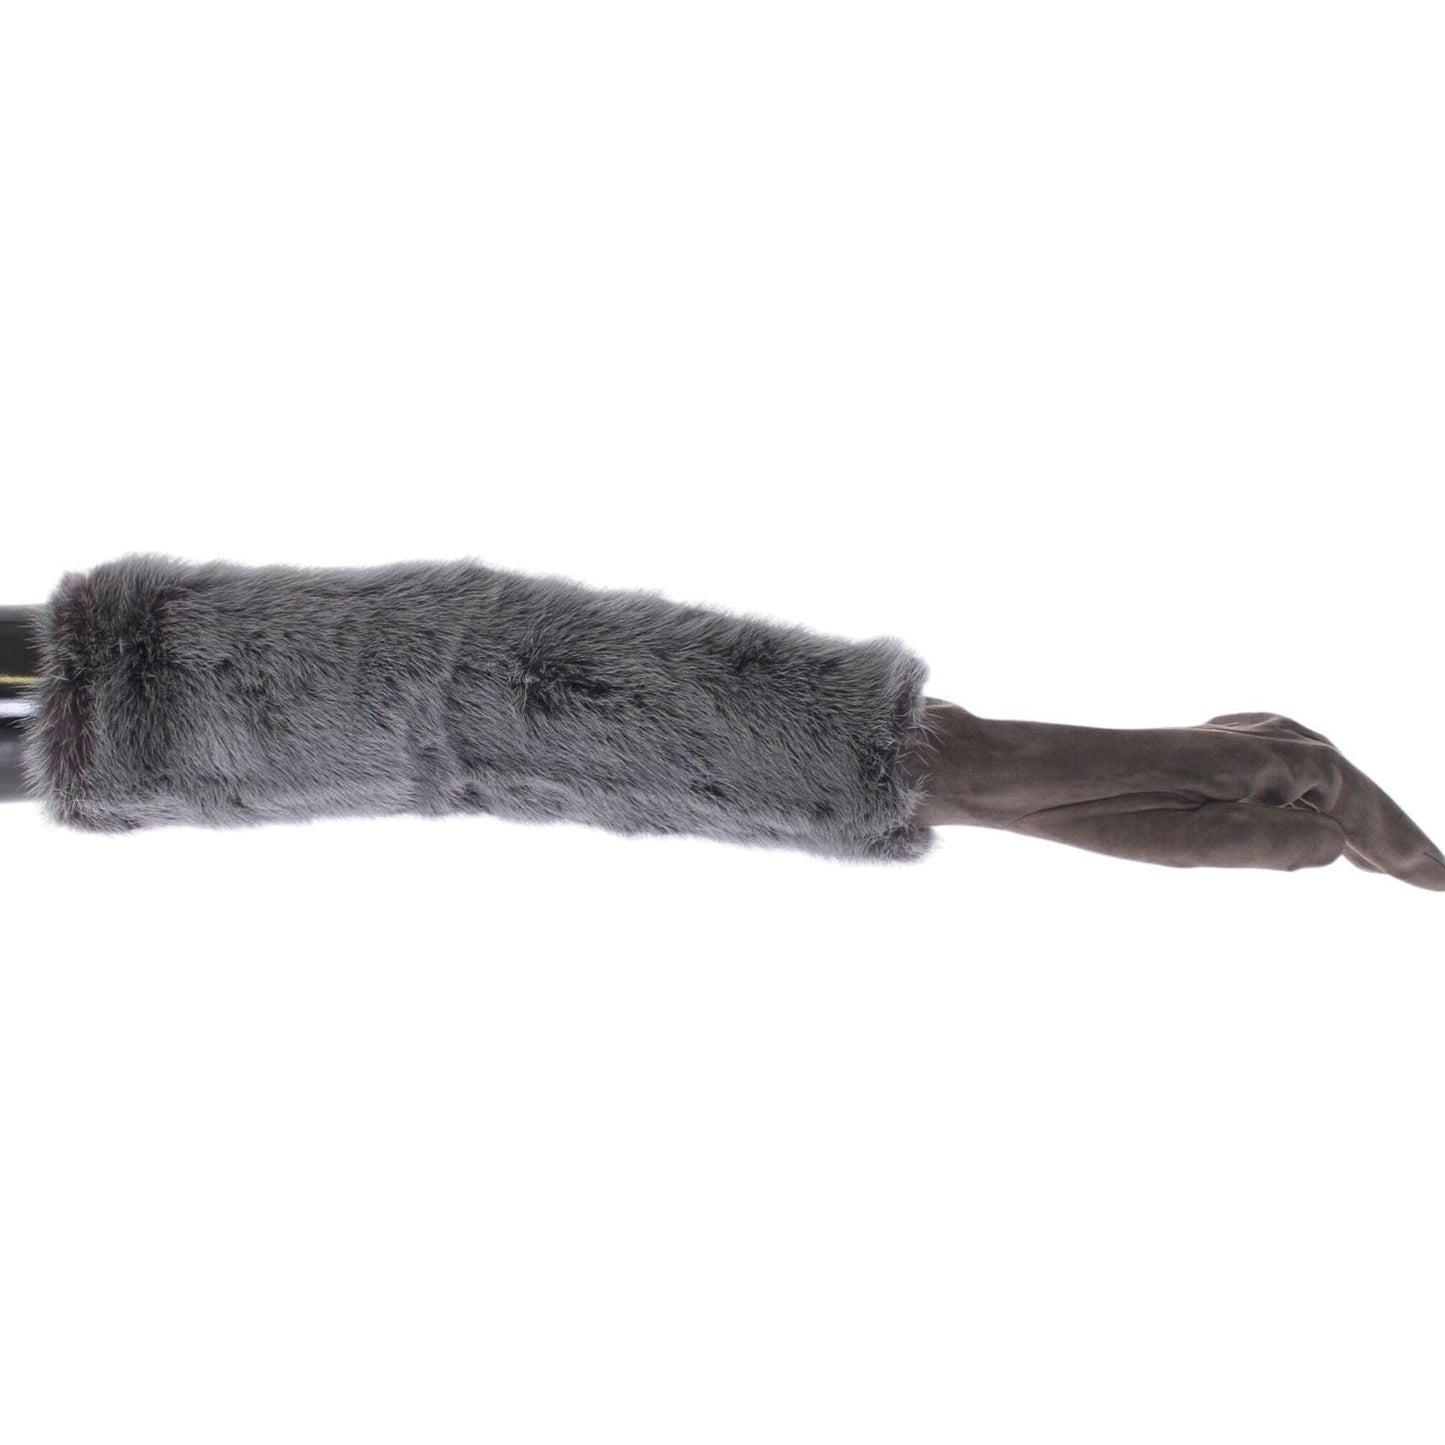 Dolce & Gabbana Elegant Gray Mink Fur Leather Elbow Gloves gray-mink-fur-lambskin-suede-leather-gloves